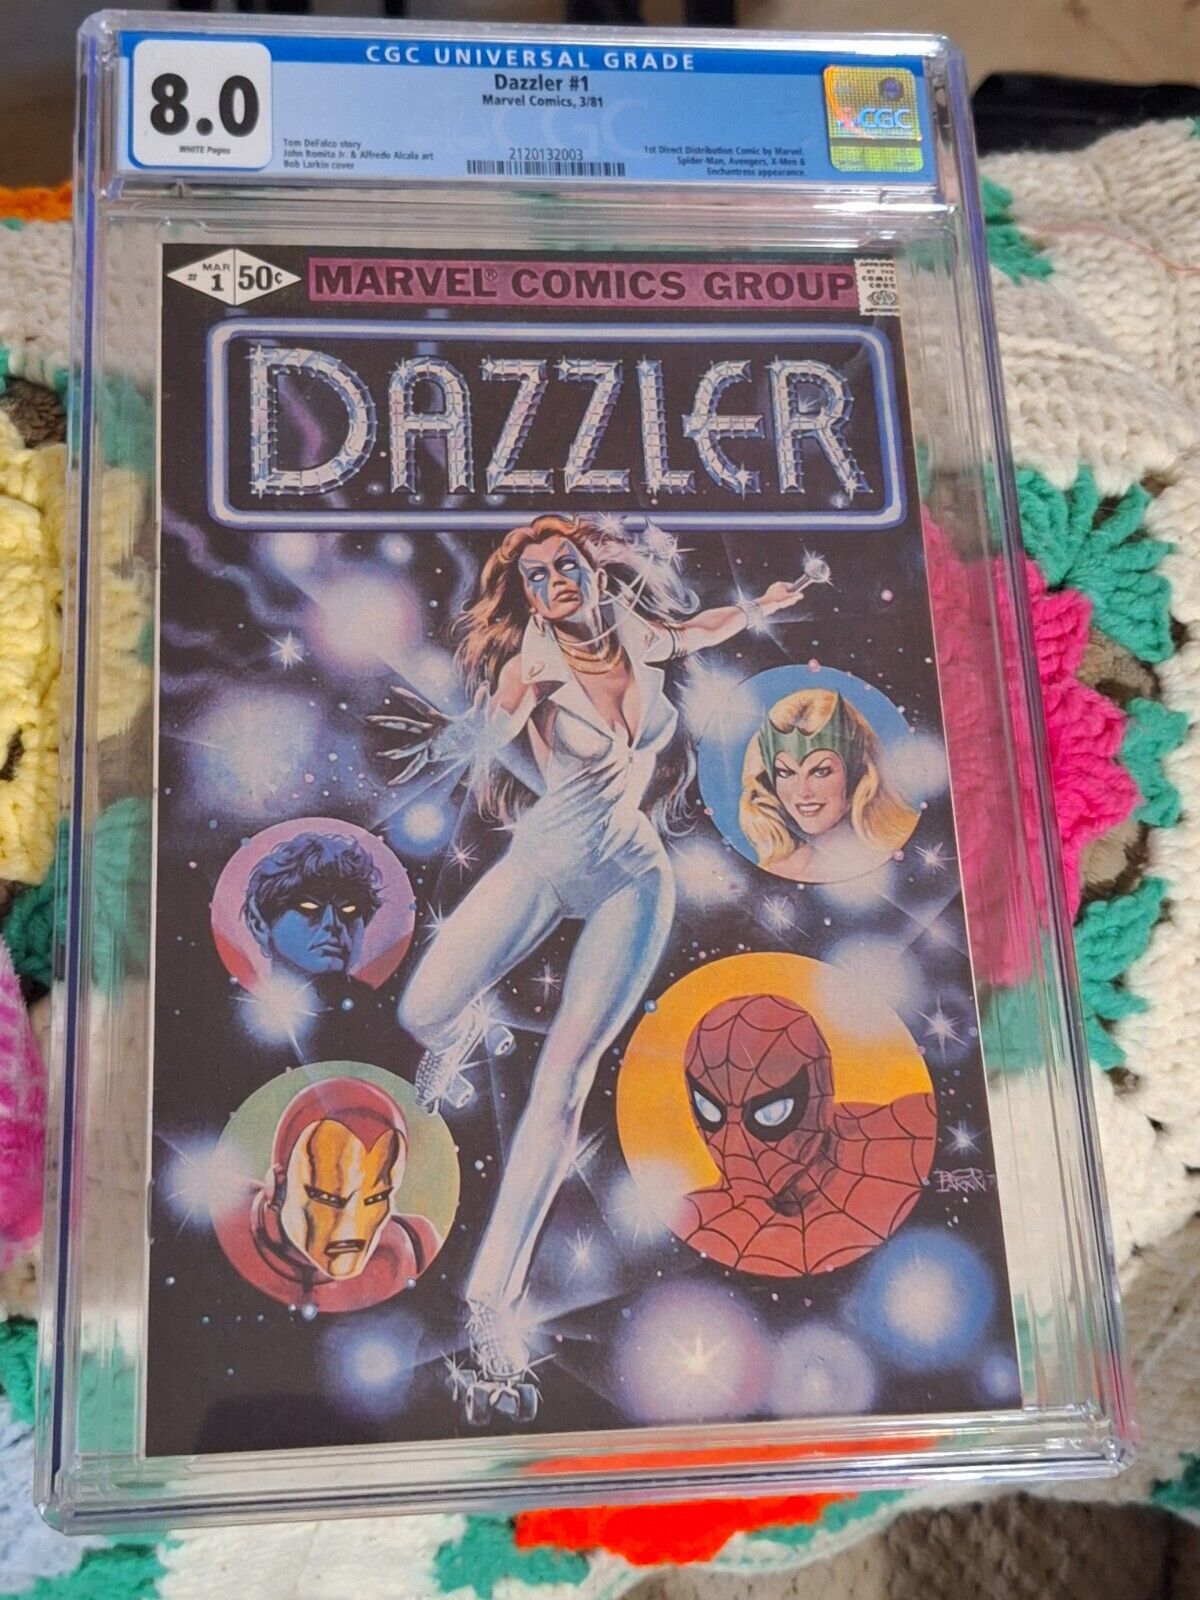 Dazzler #1 (Marvel Comics March 1981)